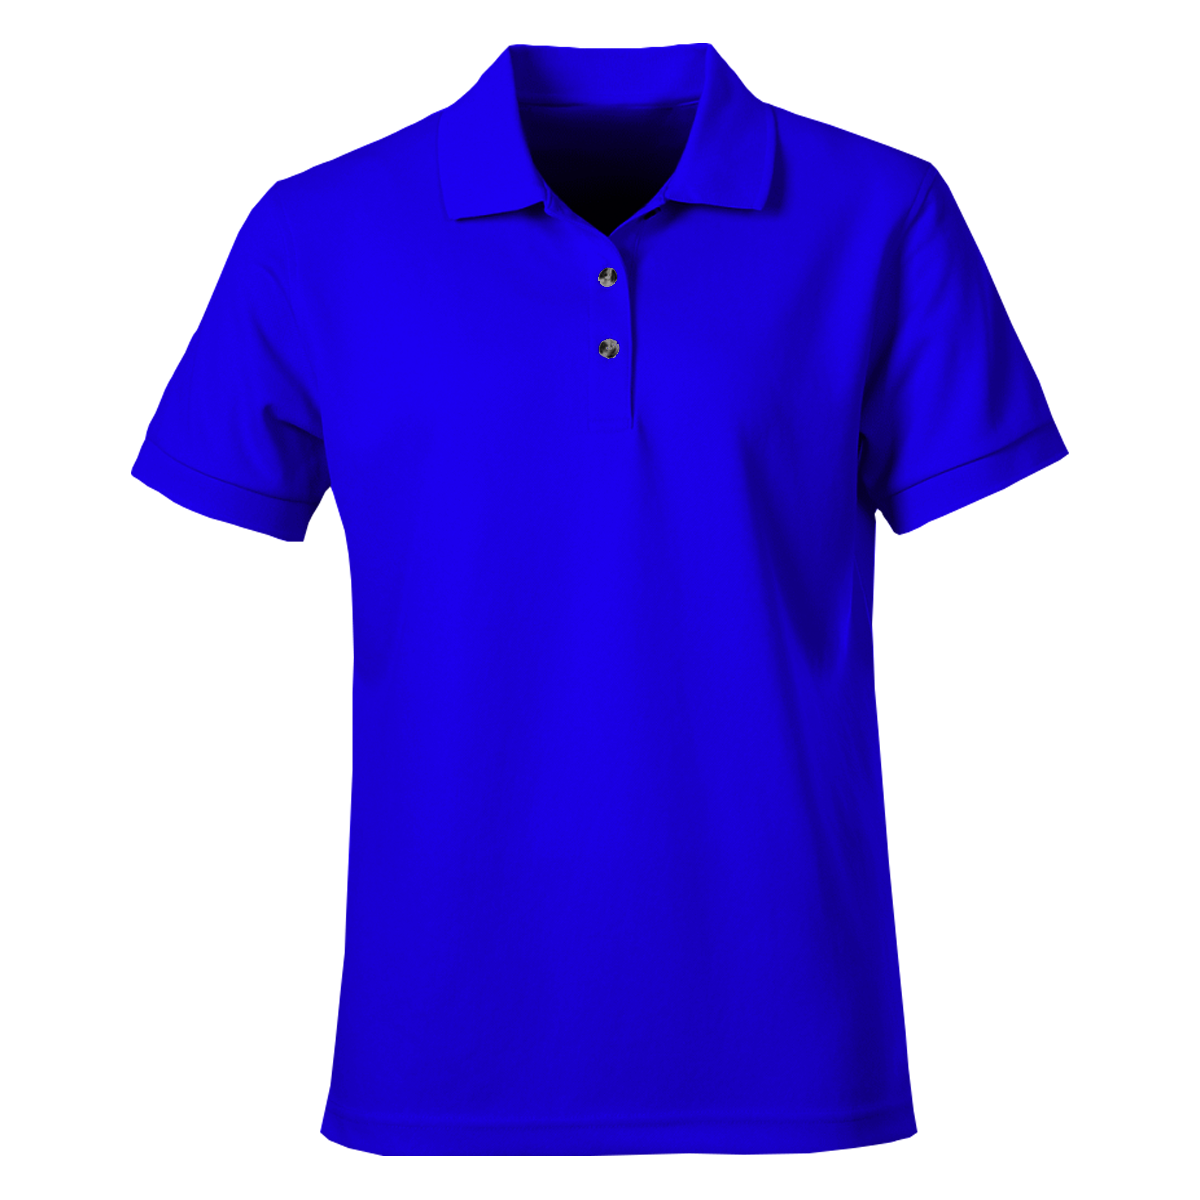 Royal Blue Polo Shirt - Unisex - Branding & Printing Solutions Company